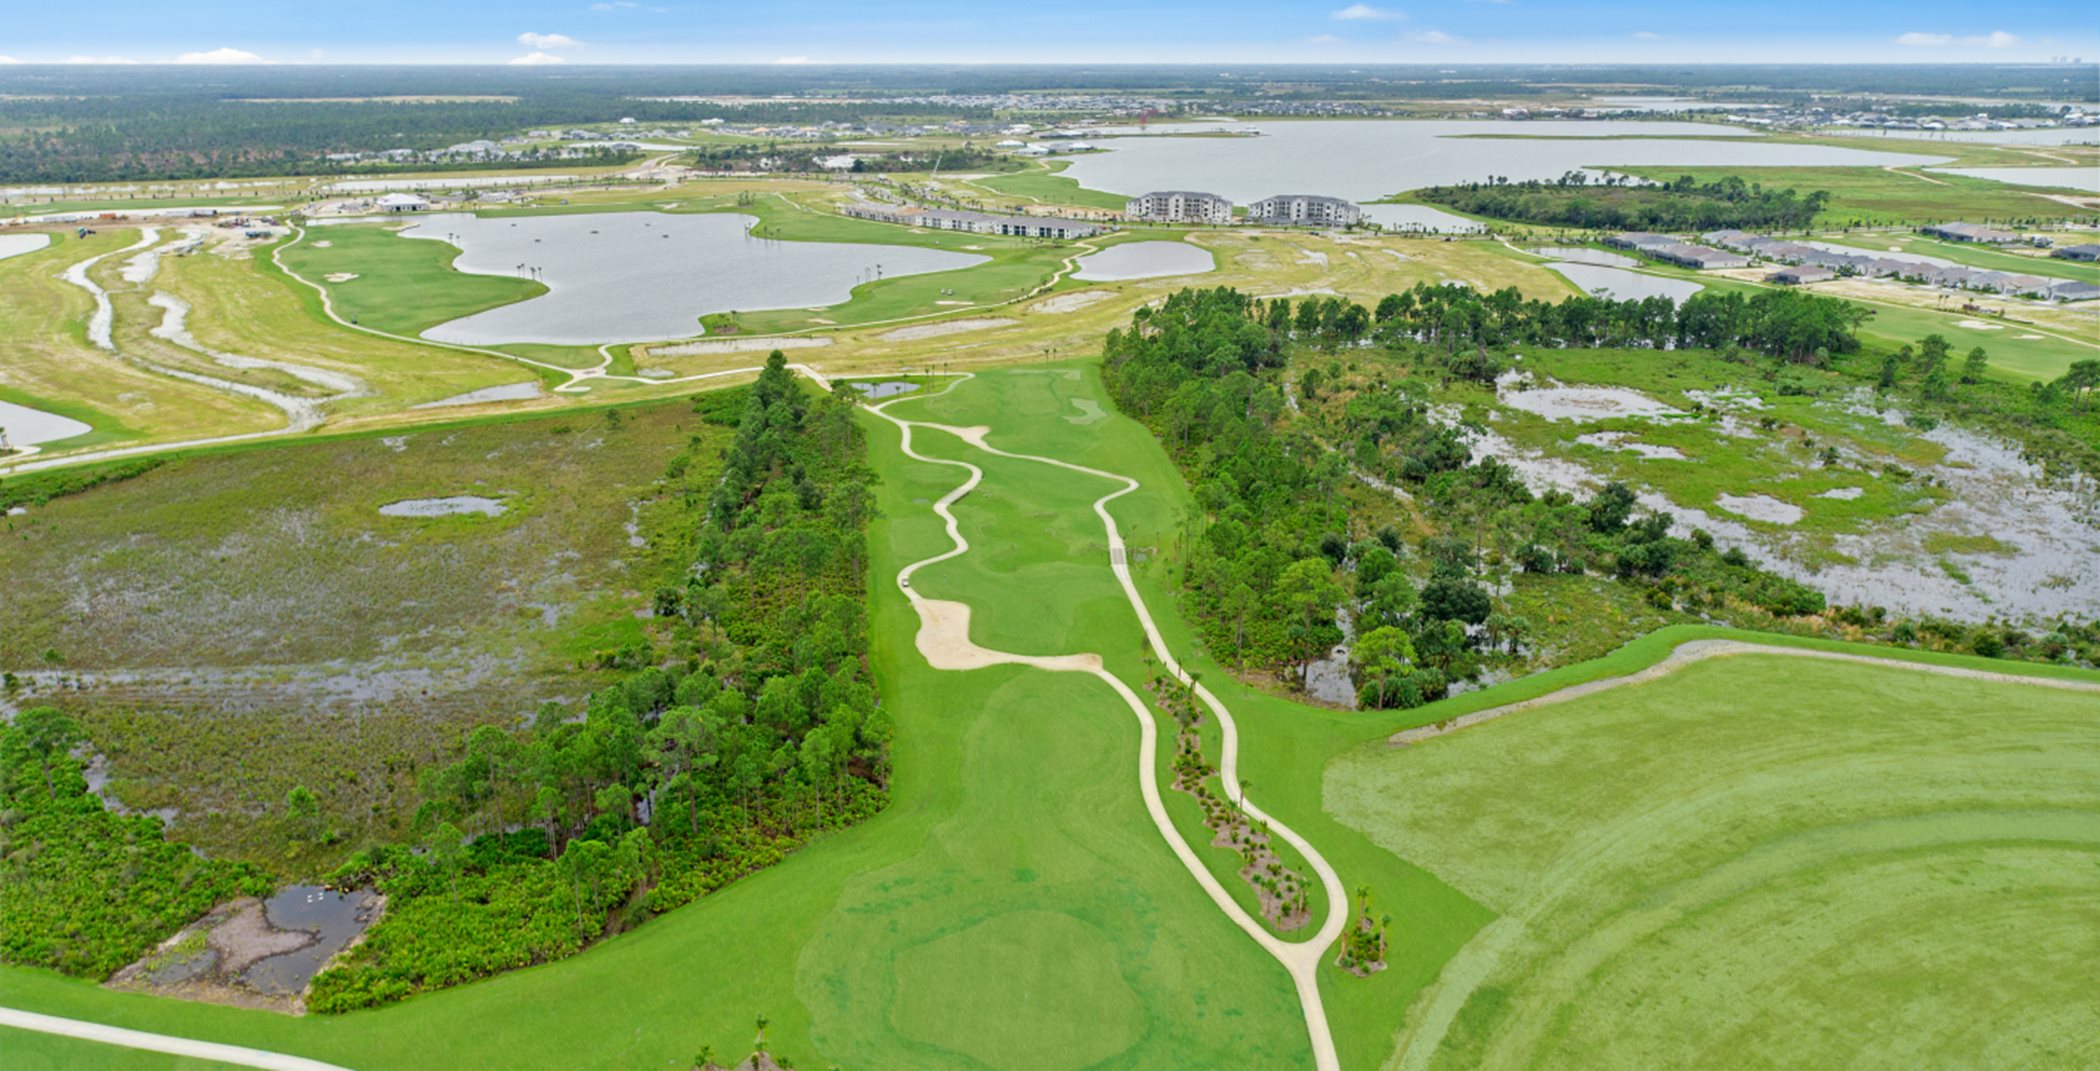 18-hole golf course